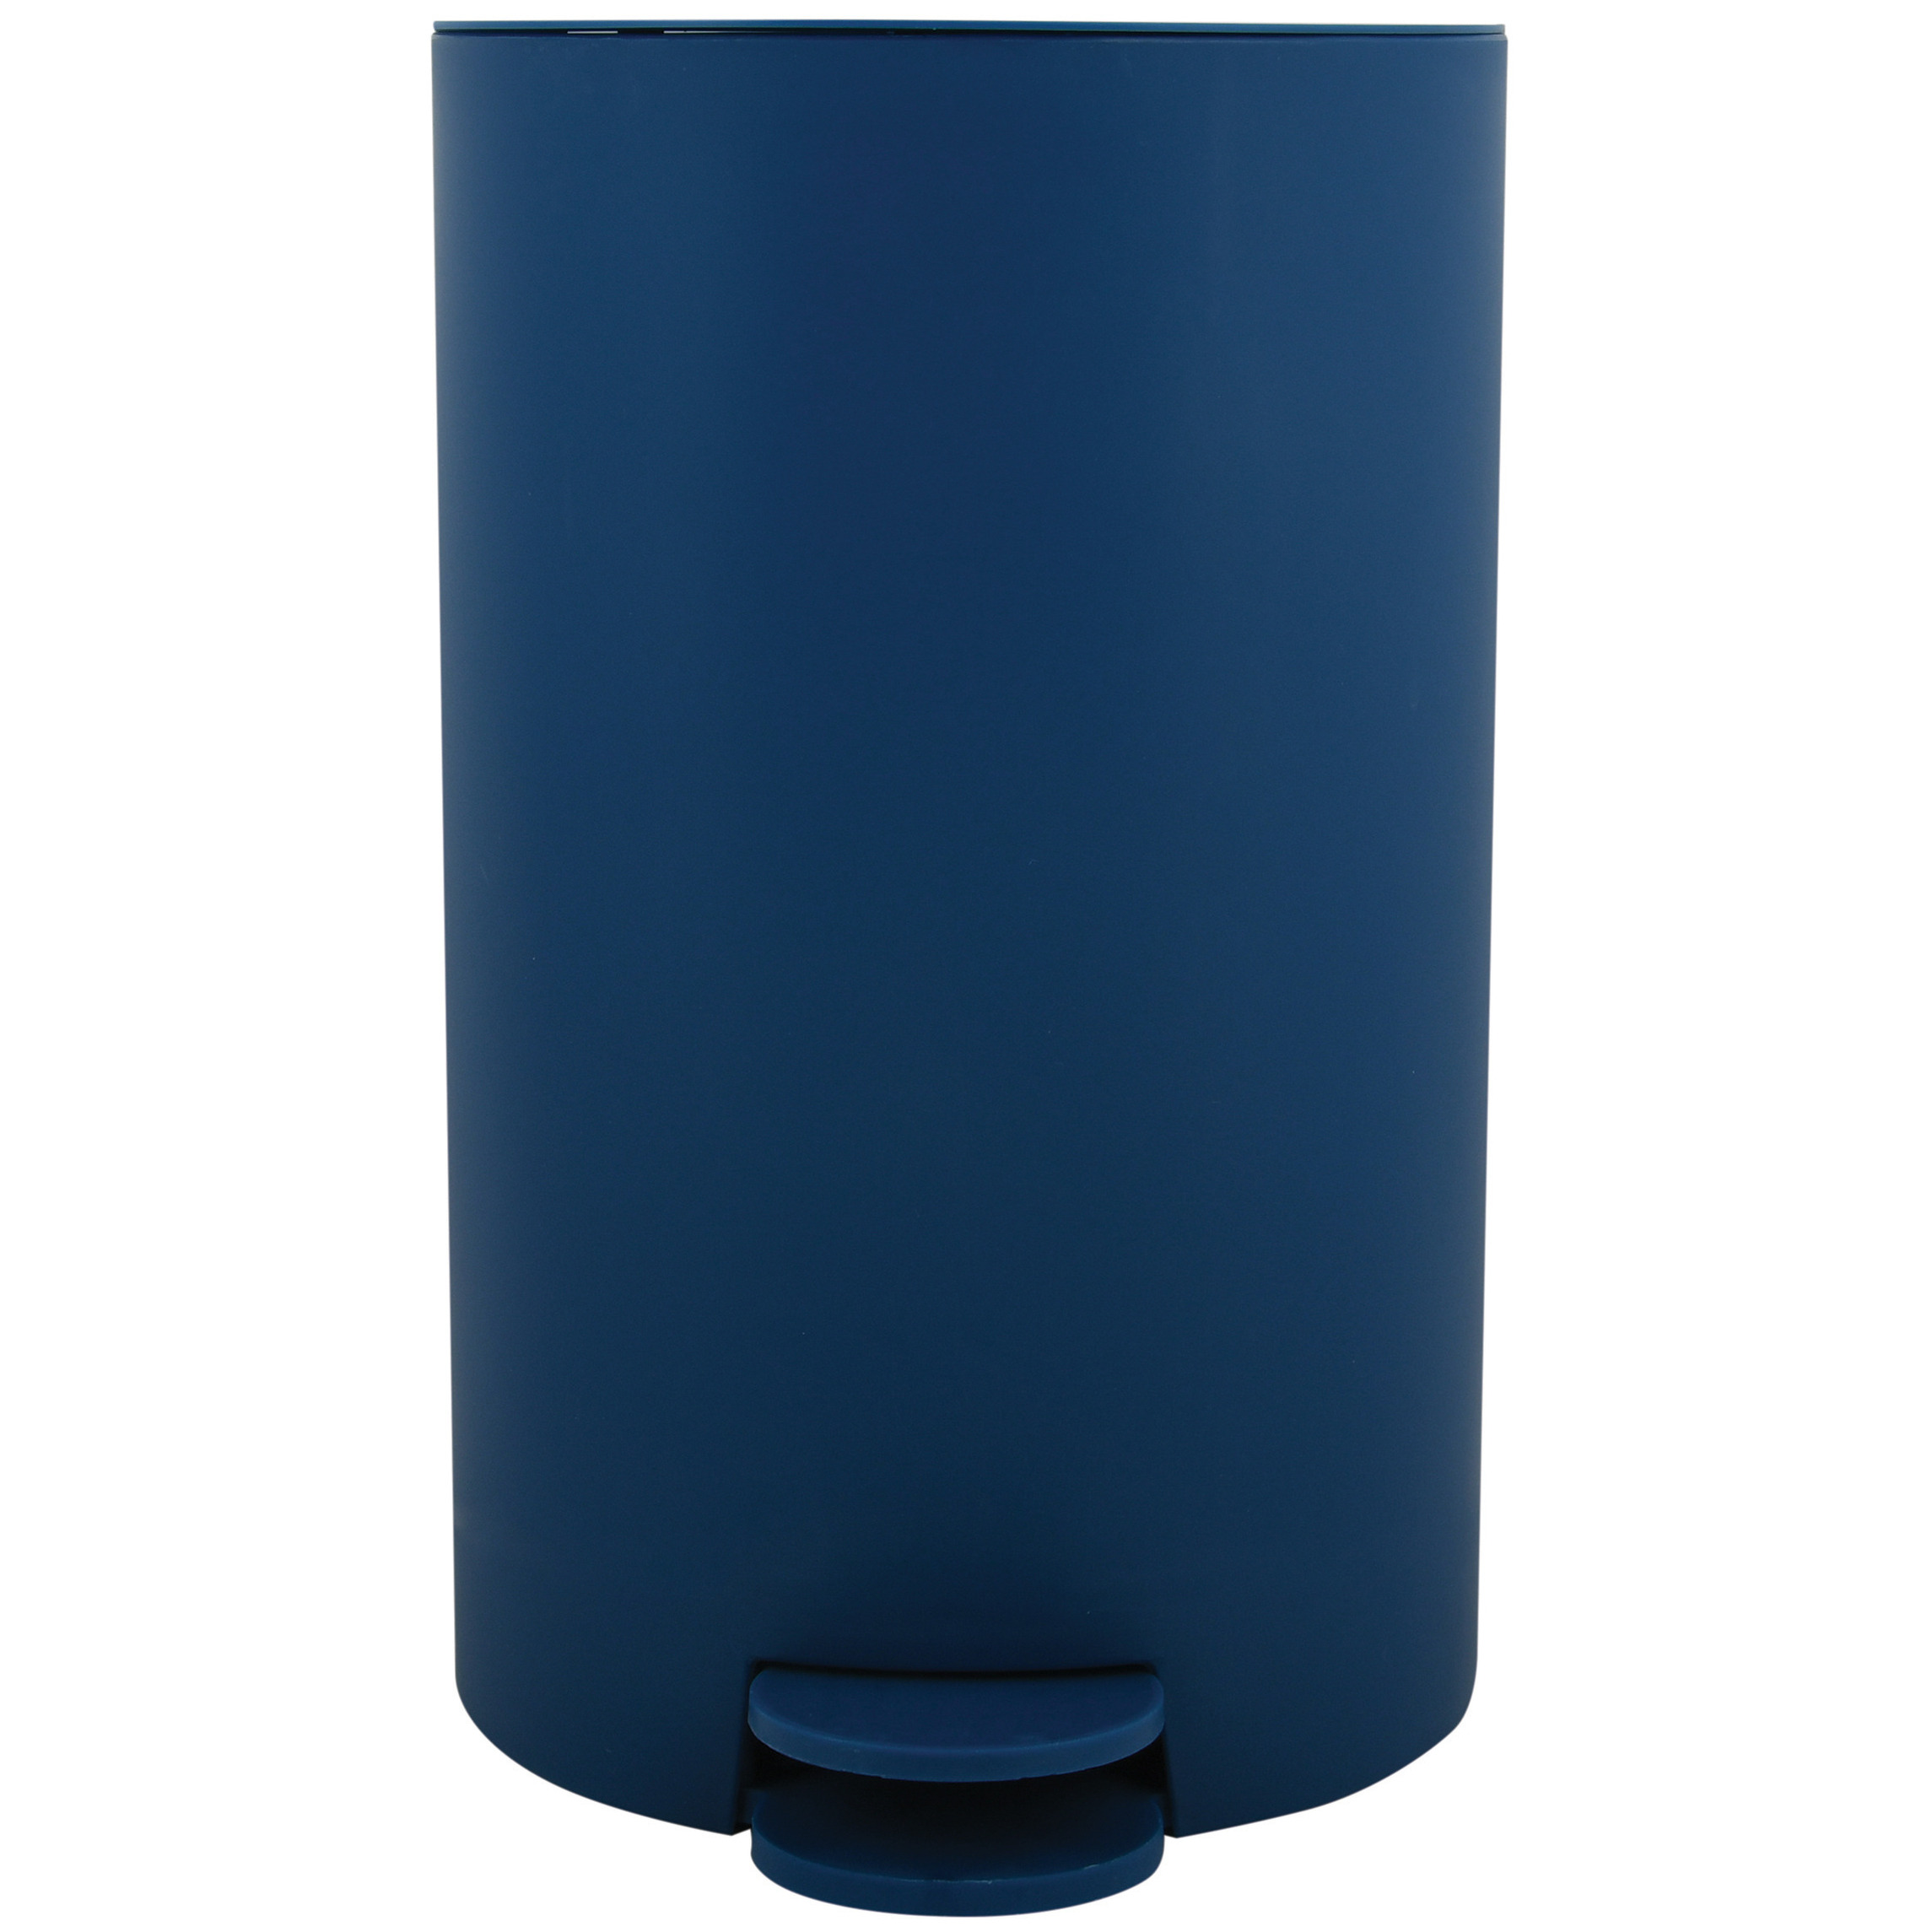 Prullenbak-pedaalemmer kunststof marine blauw 3 liter 15 x 27 cm Badkamer-toilet